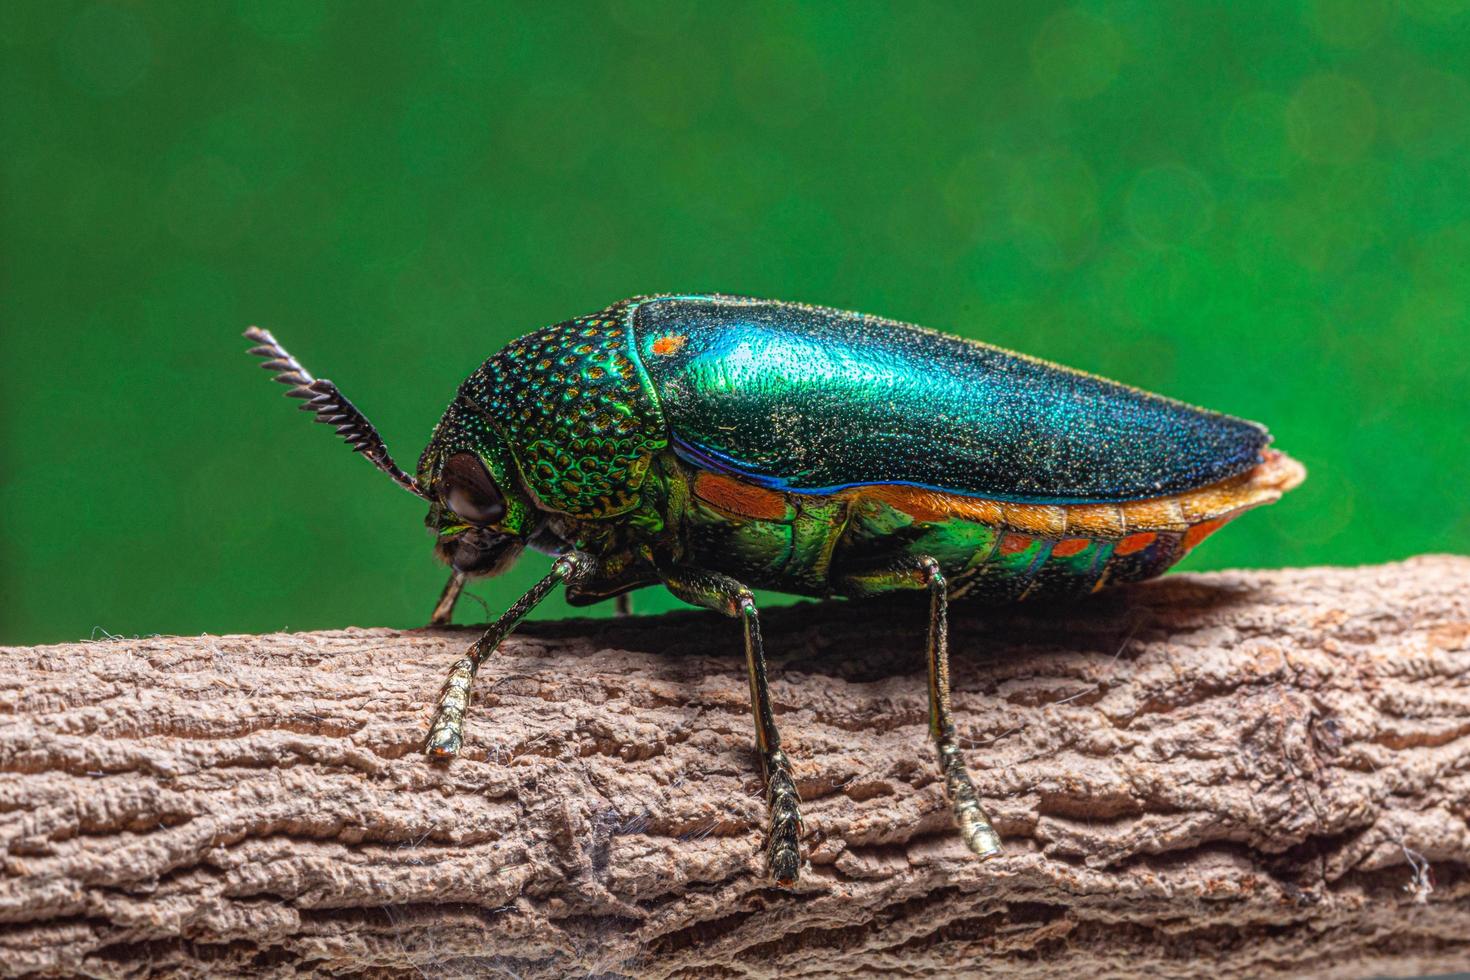 buprestidae insect op groene achtergrond foto